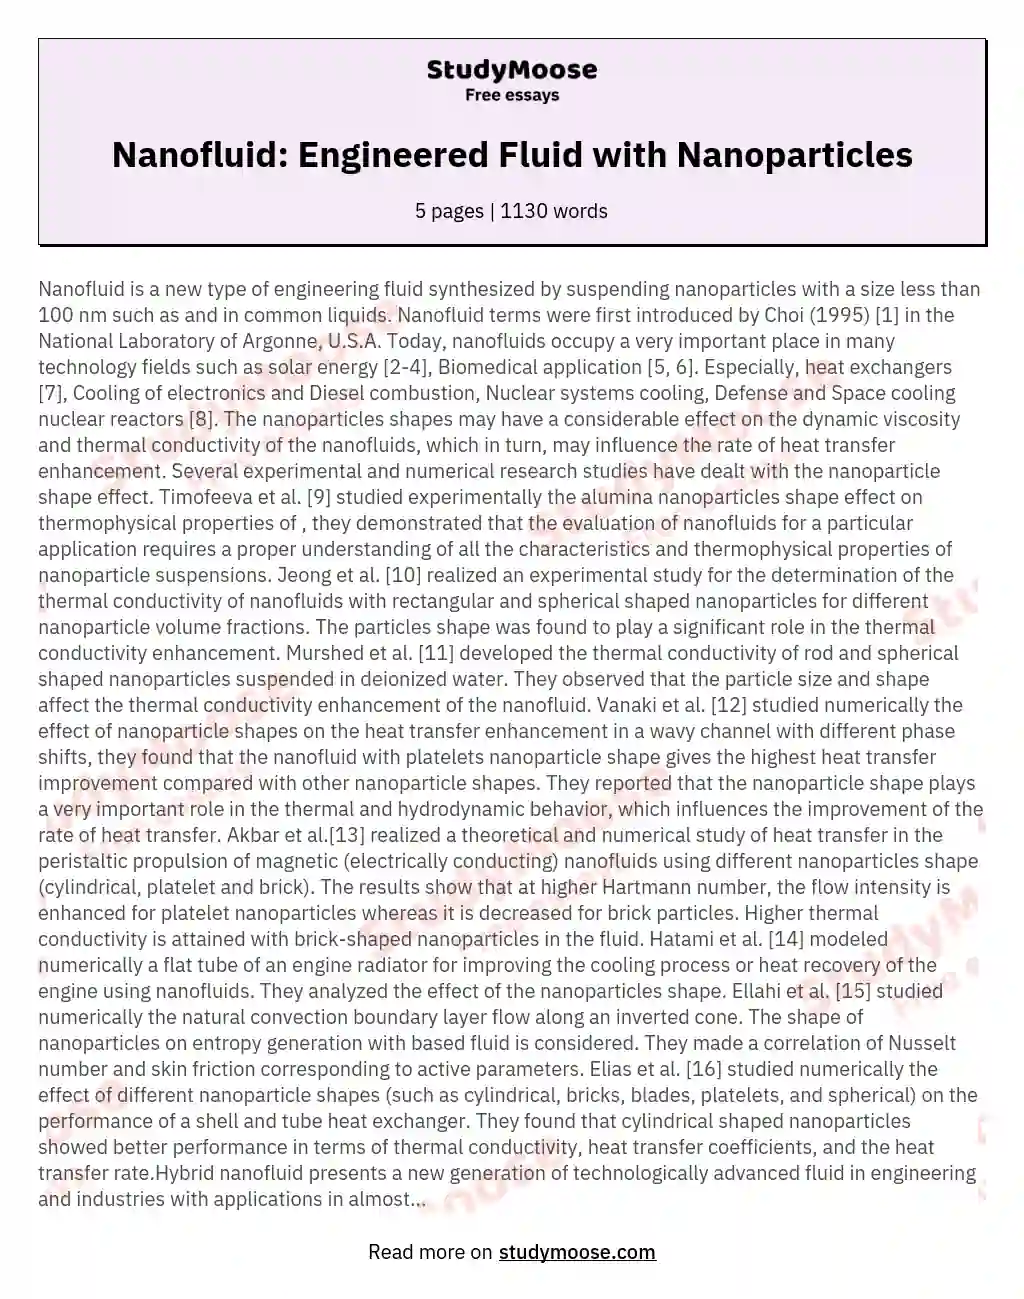 Nanofluid: Engineered Fluid with Nanoparticles essay